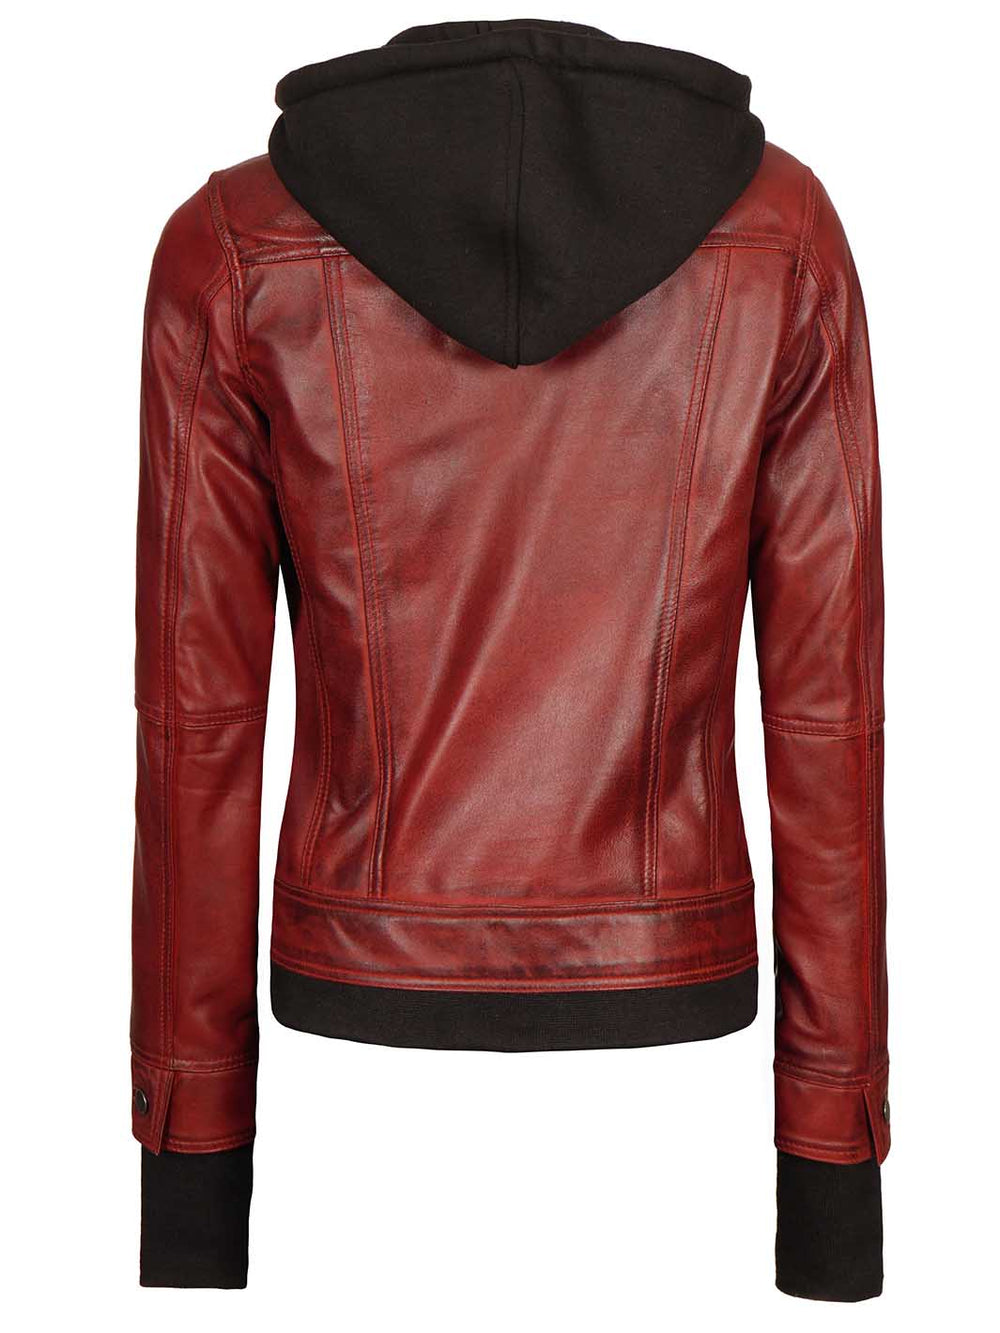 maroon Leather Jacket  with hood